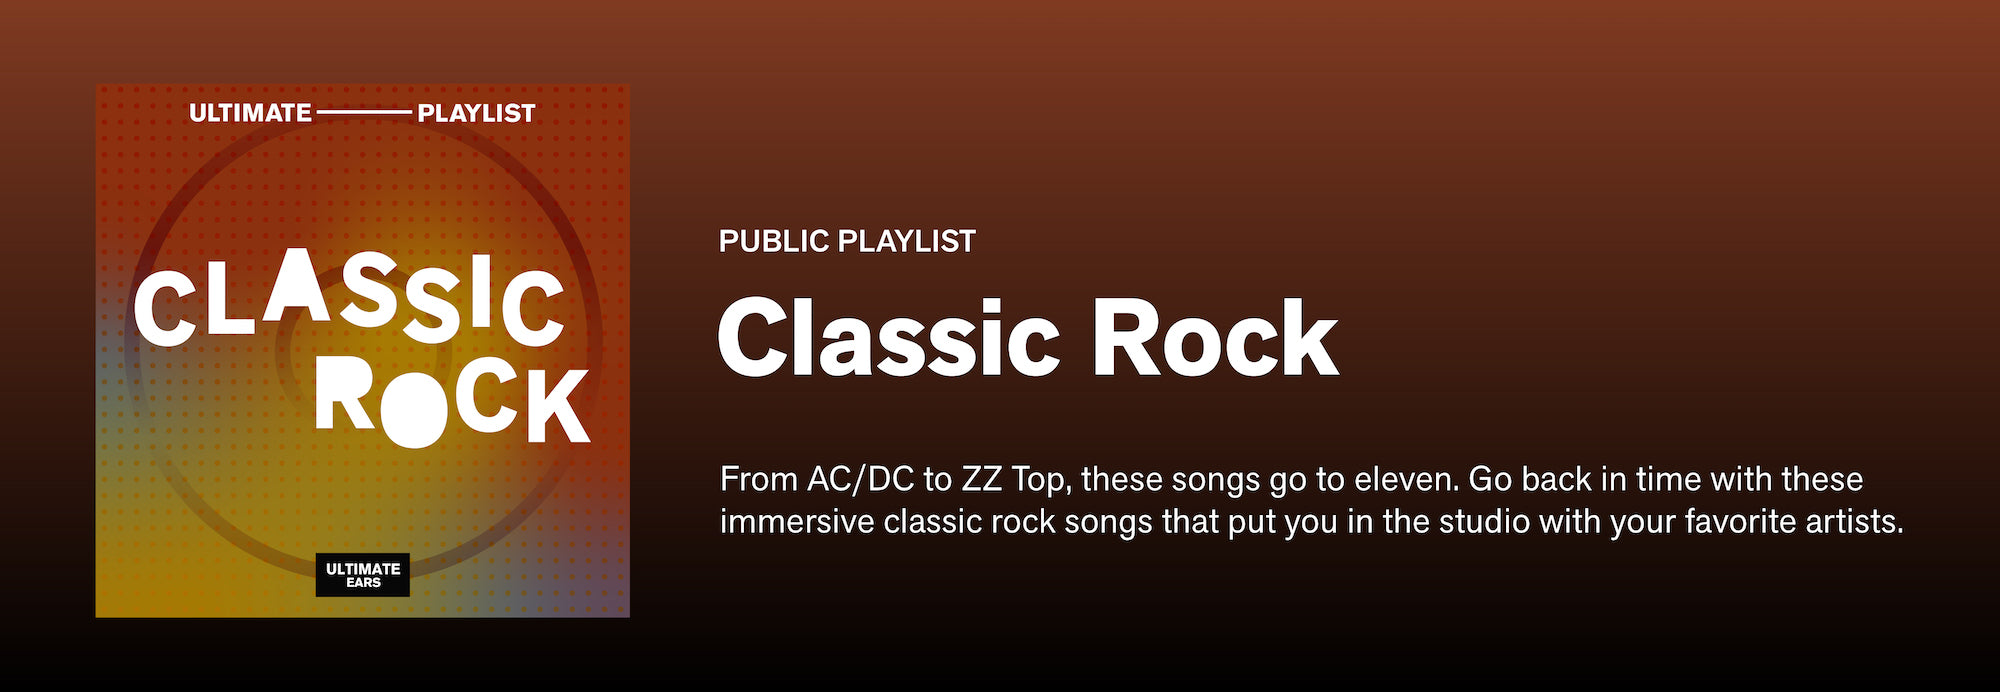 Playlist: Immersive Classic Rock Tracks